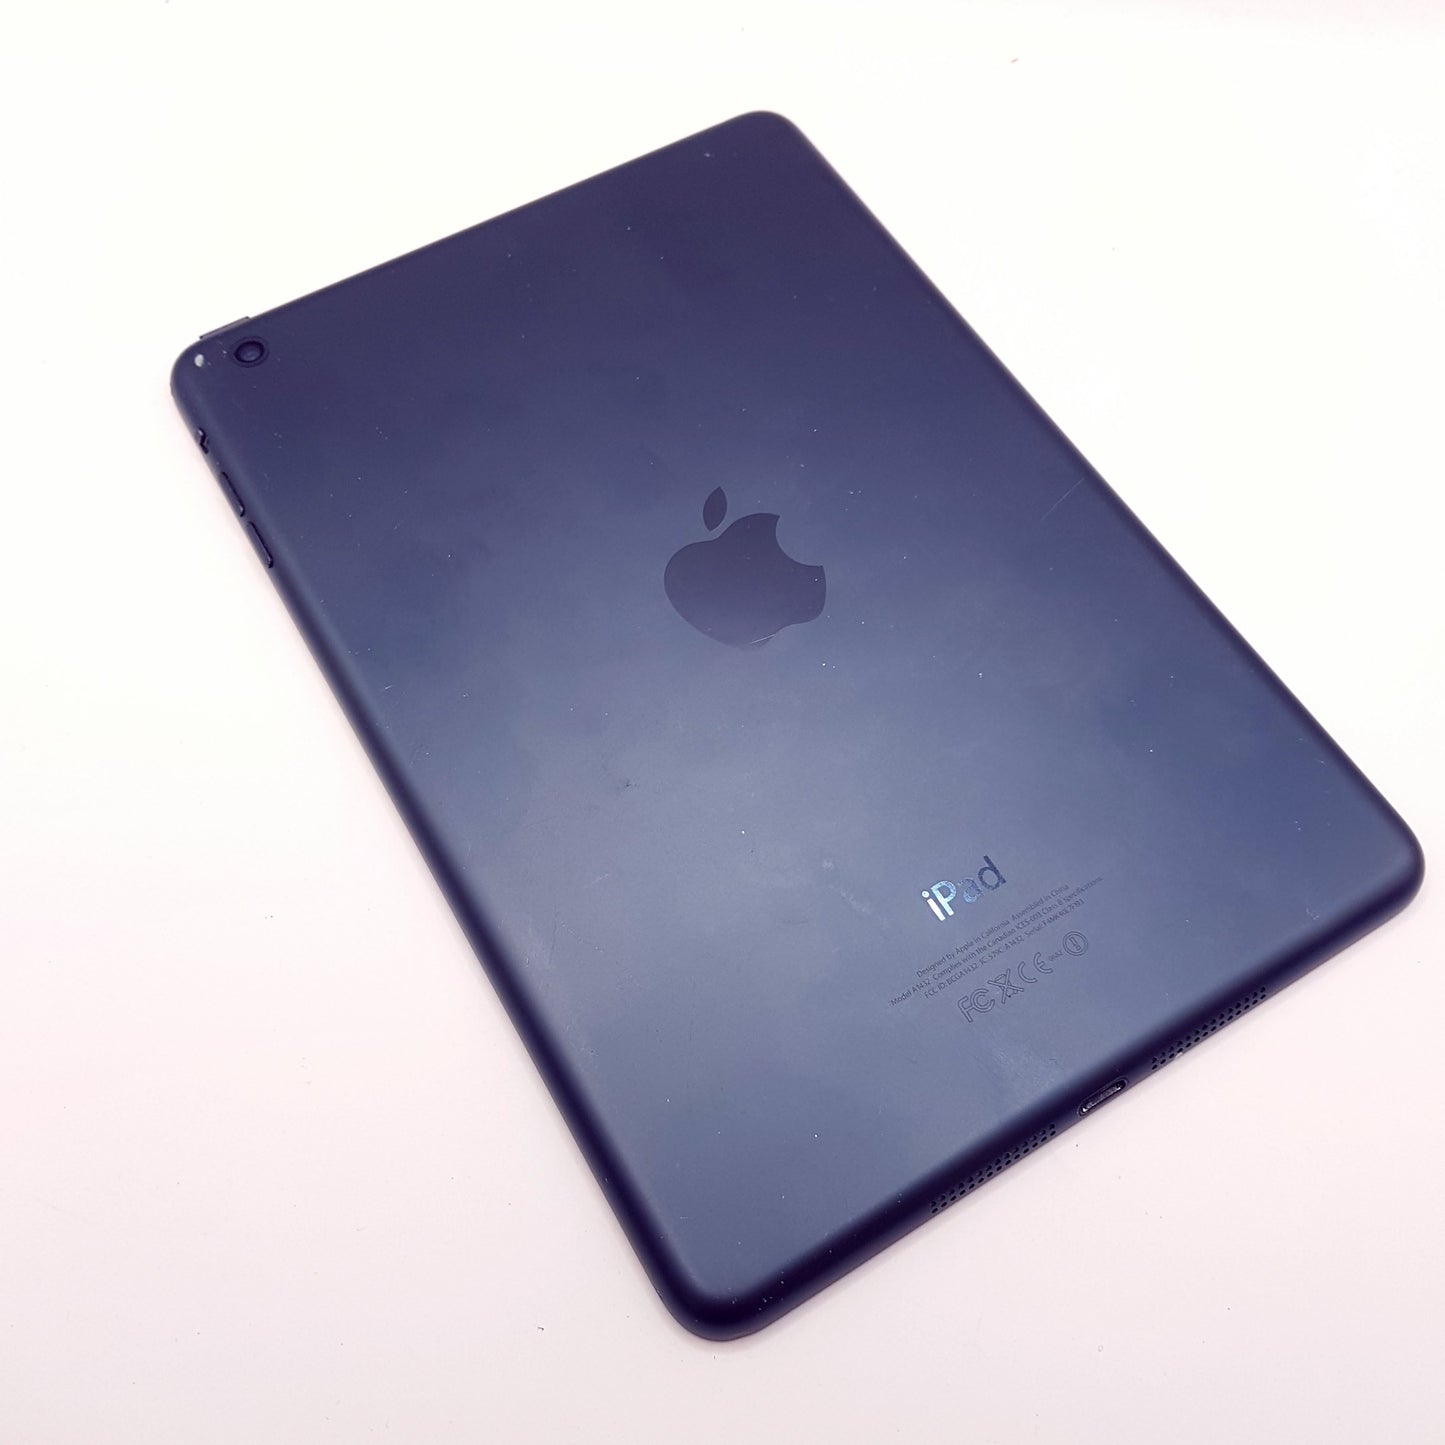 Apple iPad Mini A1432 Space Grau 16GB Wifi Tablet - gebraucht